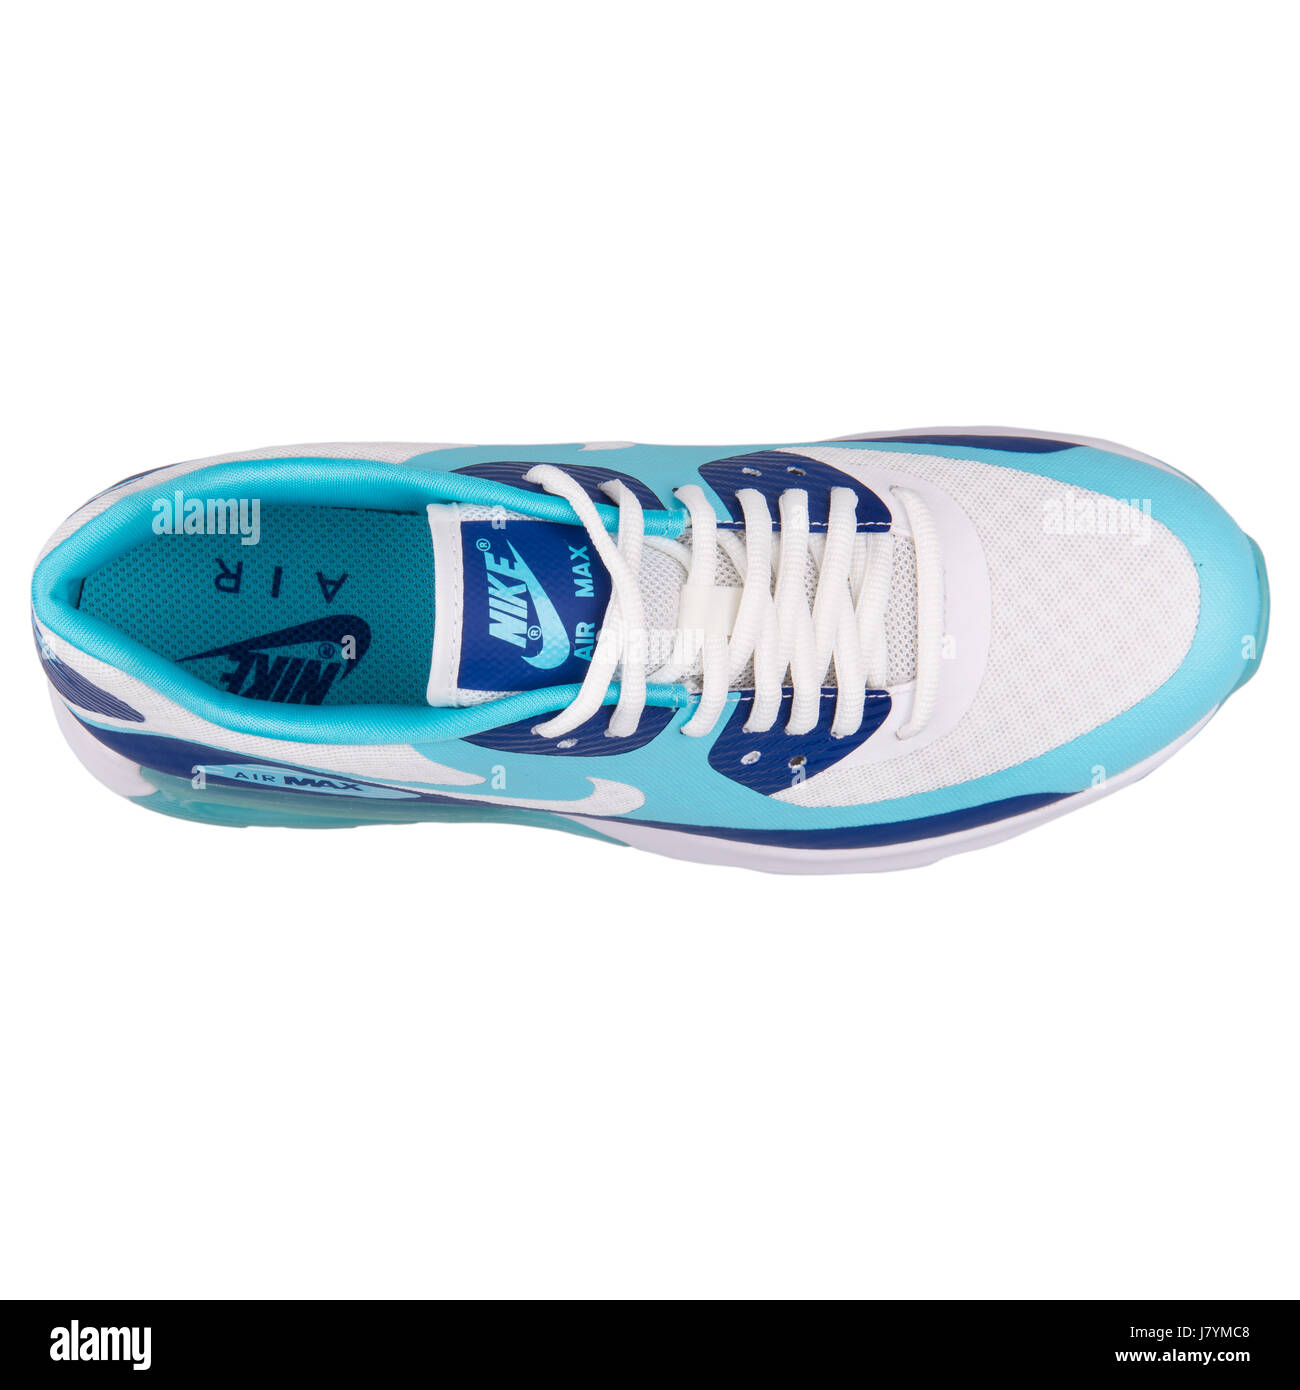 W Nike Air Max 90 Ultra BR profondo blu royal, turchese e le donne bianche  in esecuzione Sneakers - 725061-400 Foto stock - Alamy